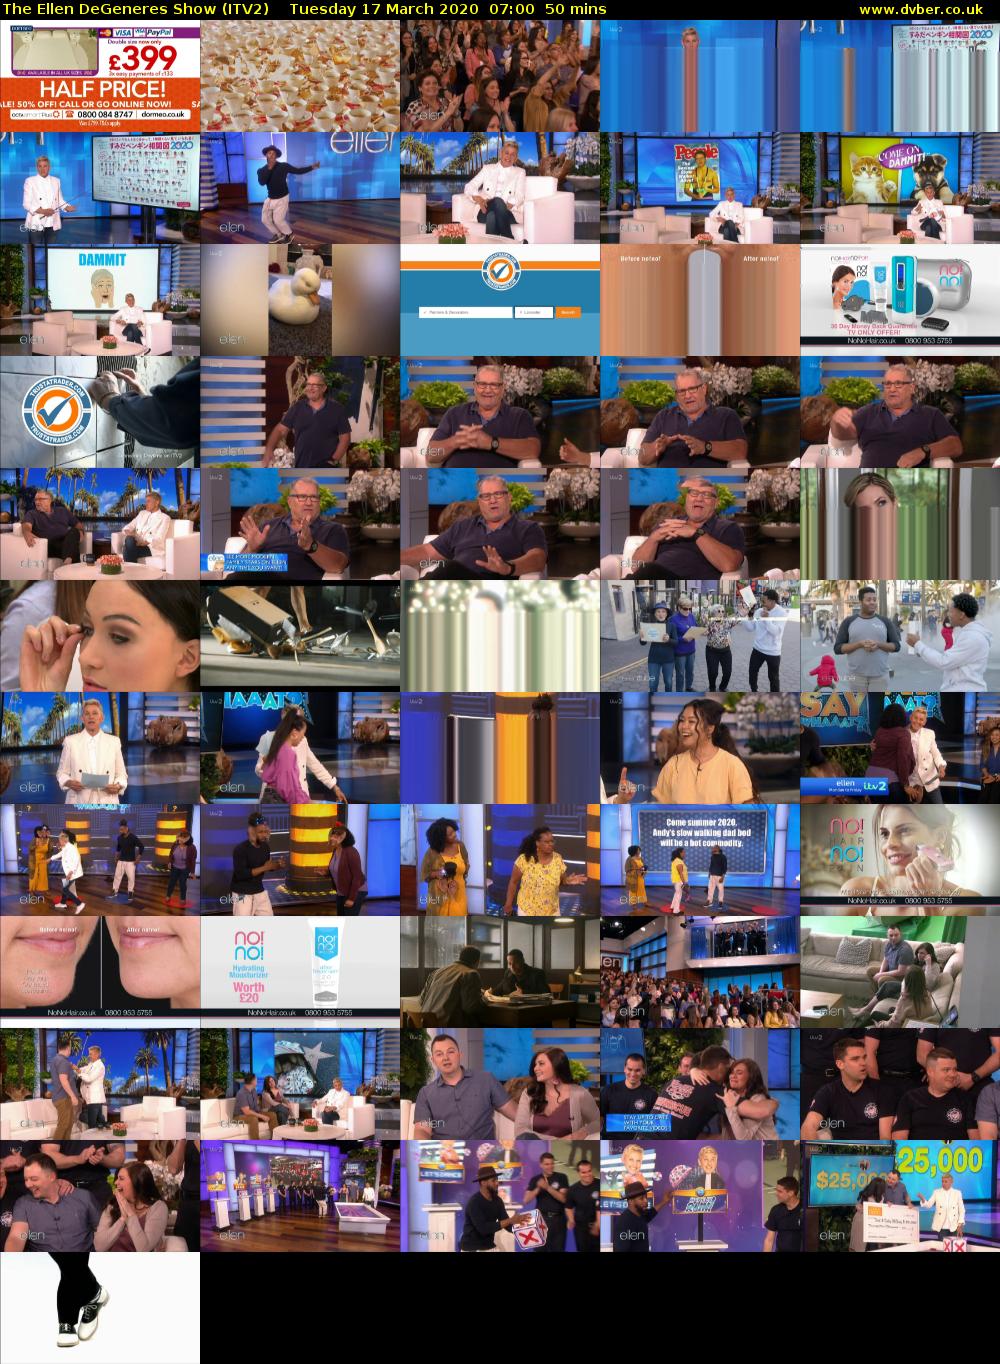 The Ellen DeGeneres Show (ITV2) Tuesday 17 March 2020 07:00 - 07:50